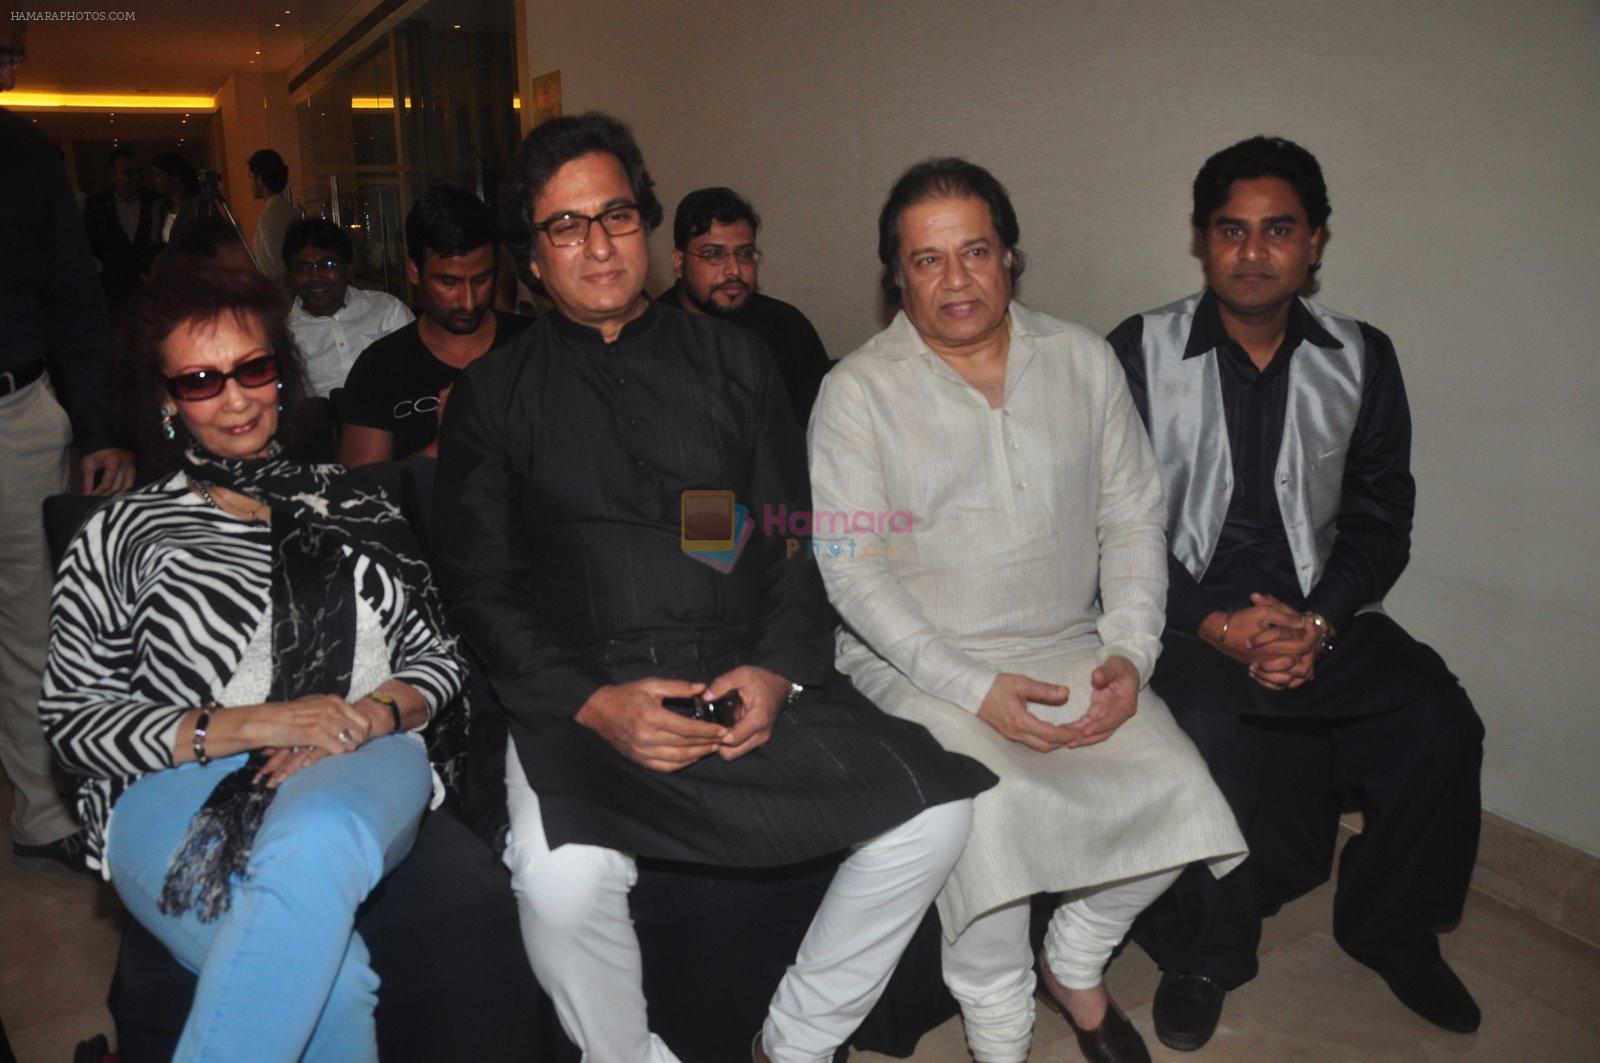 Anup Jalota, Talat Aziz, Chitra Singh at Jagjit Singh's birth anniversary in Mumbai on 3rd Feb 2015